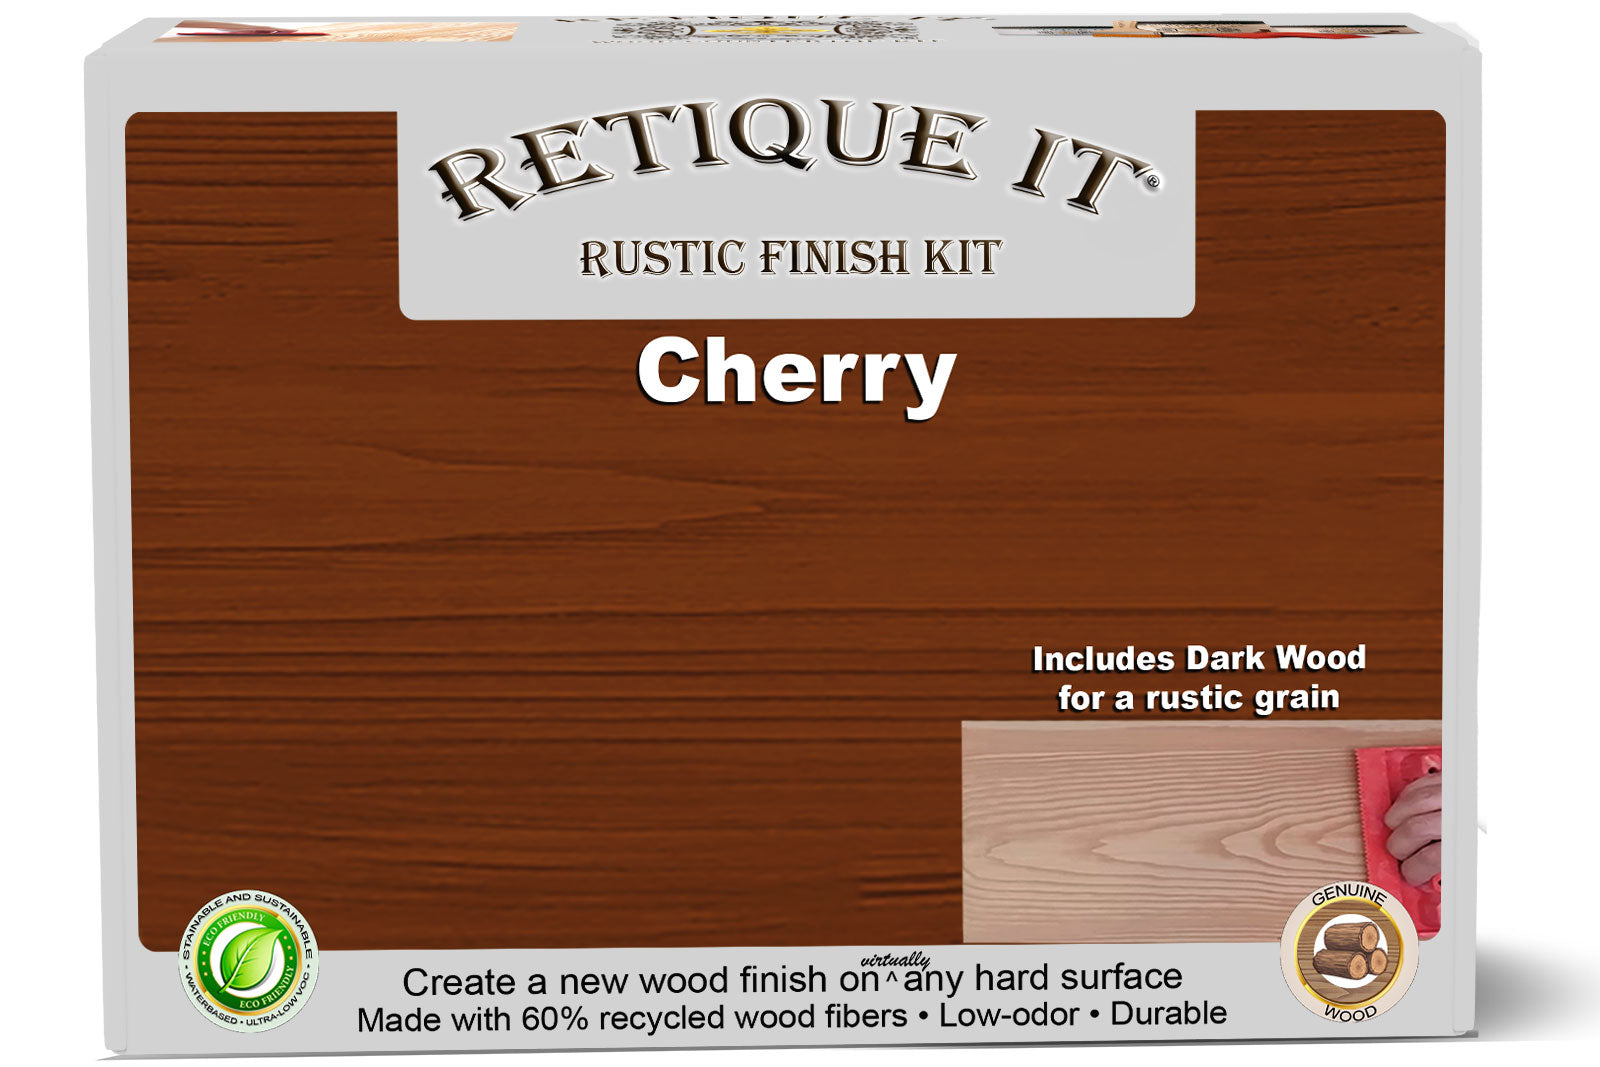 Rustic Finish Kit - Cherry